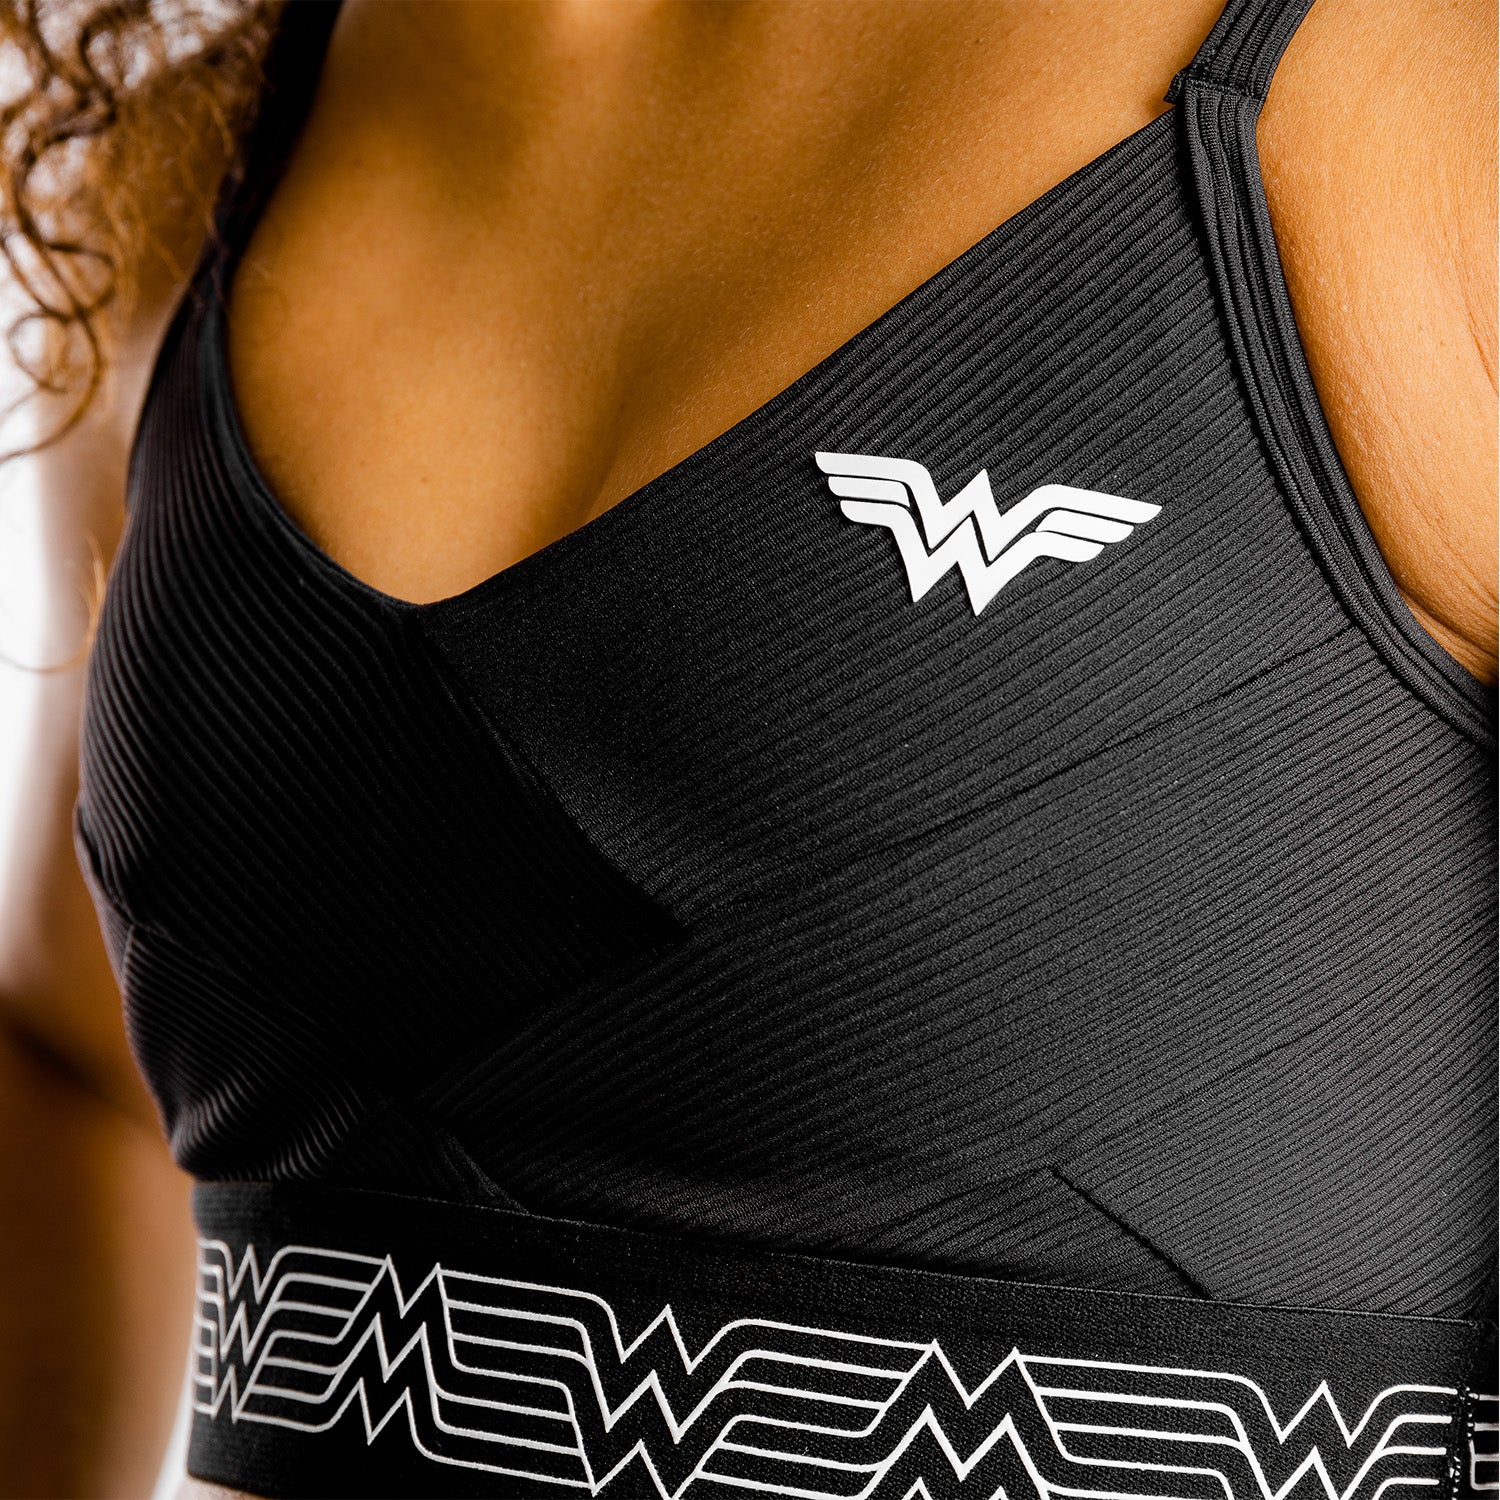 ID, Wonder Woman Straps Sports Bra - Black, Sports Bra Women